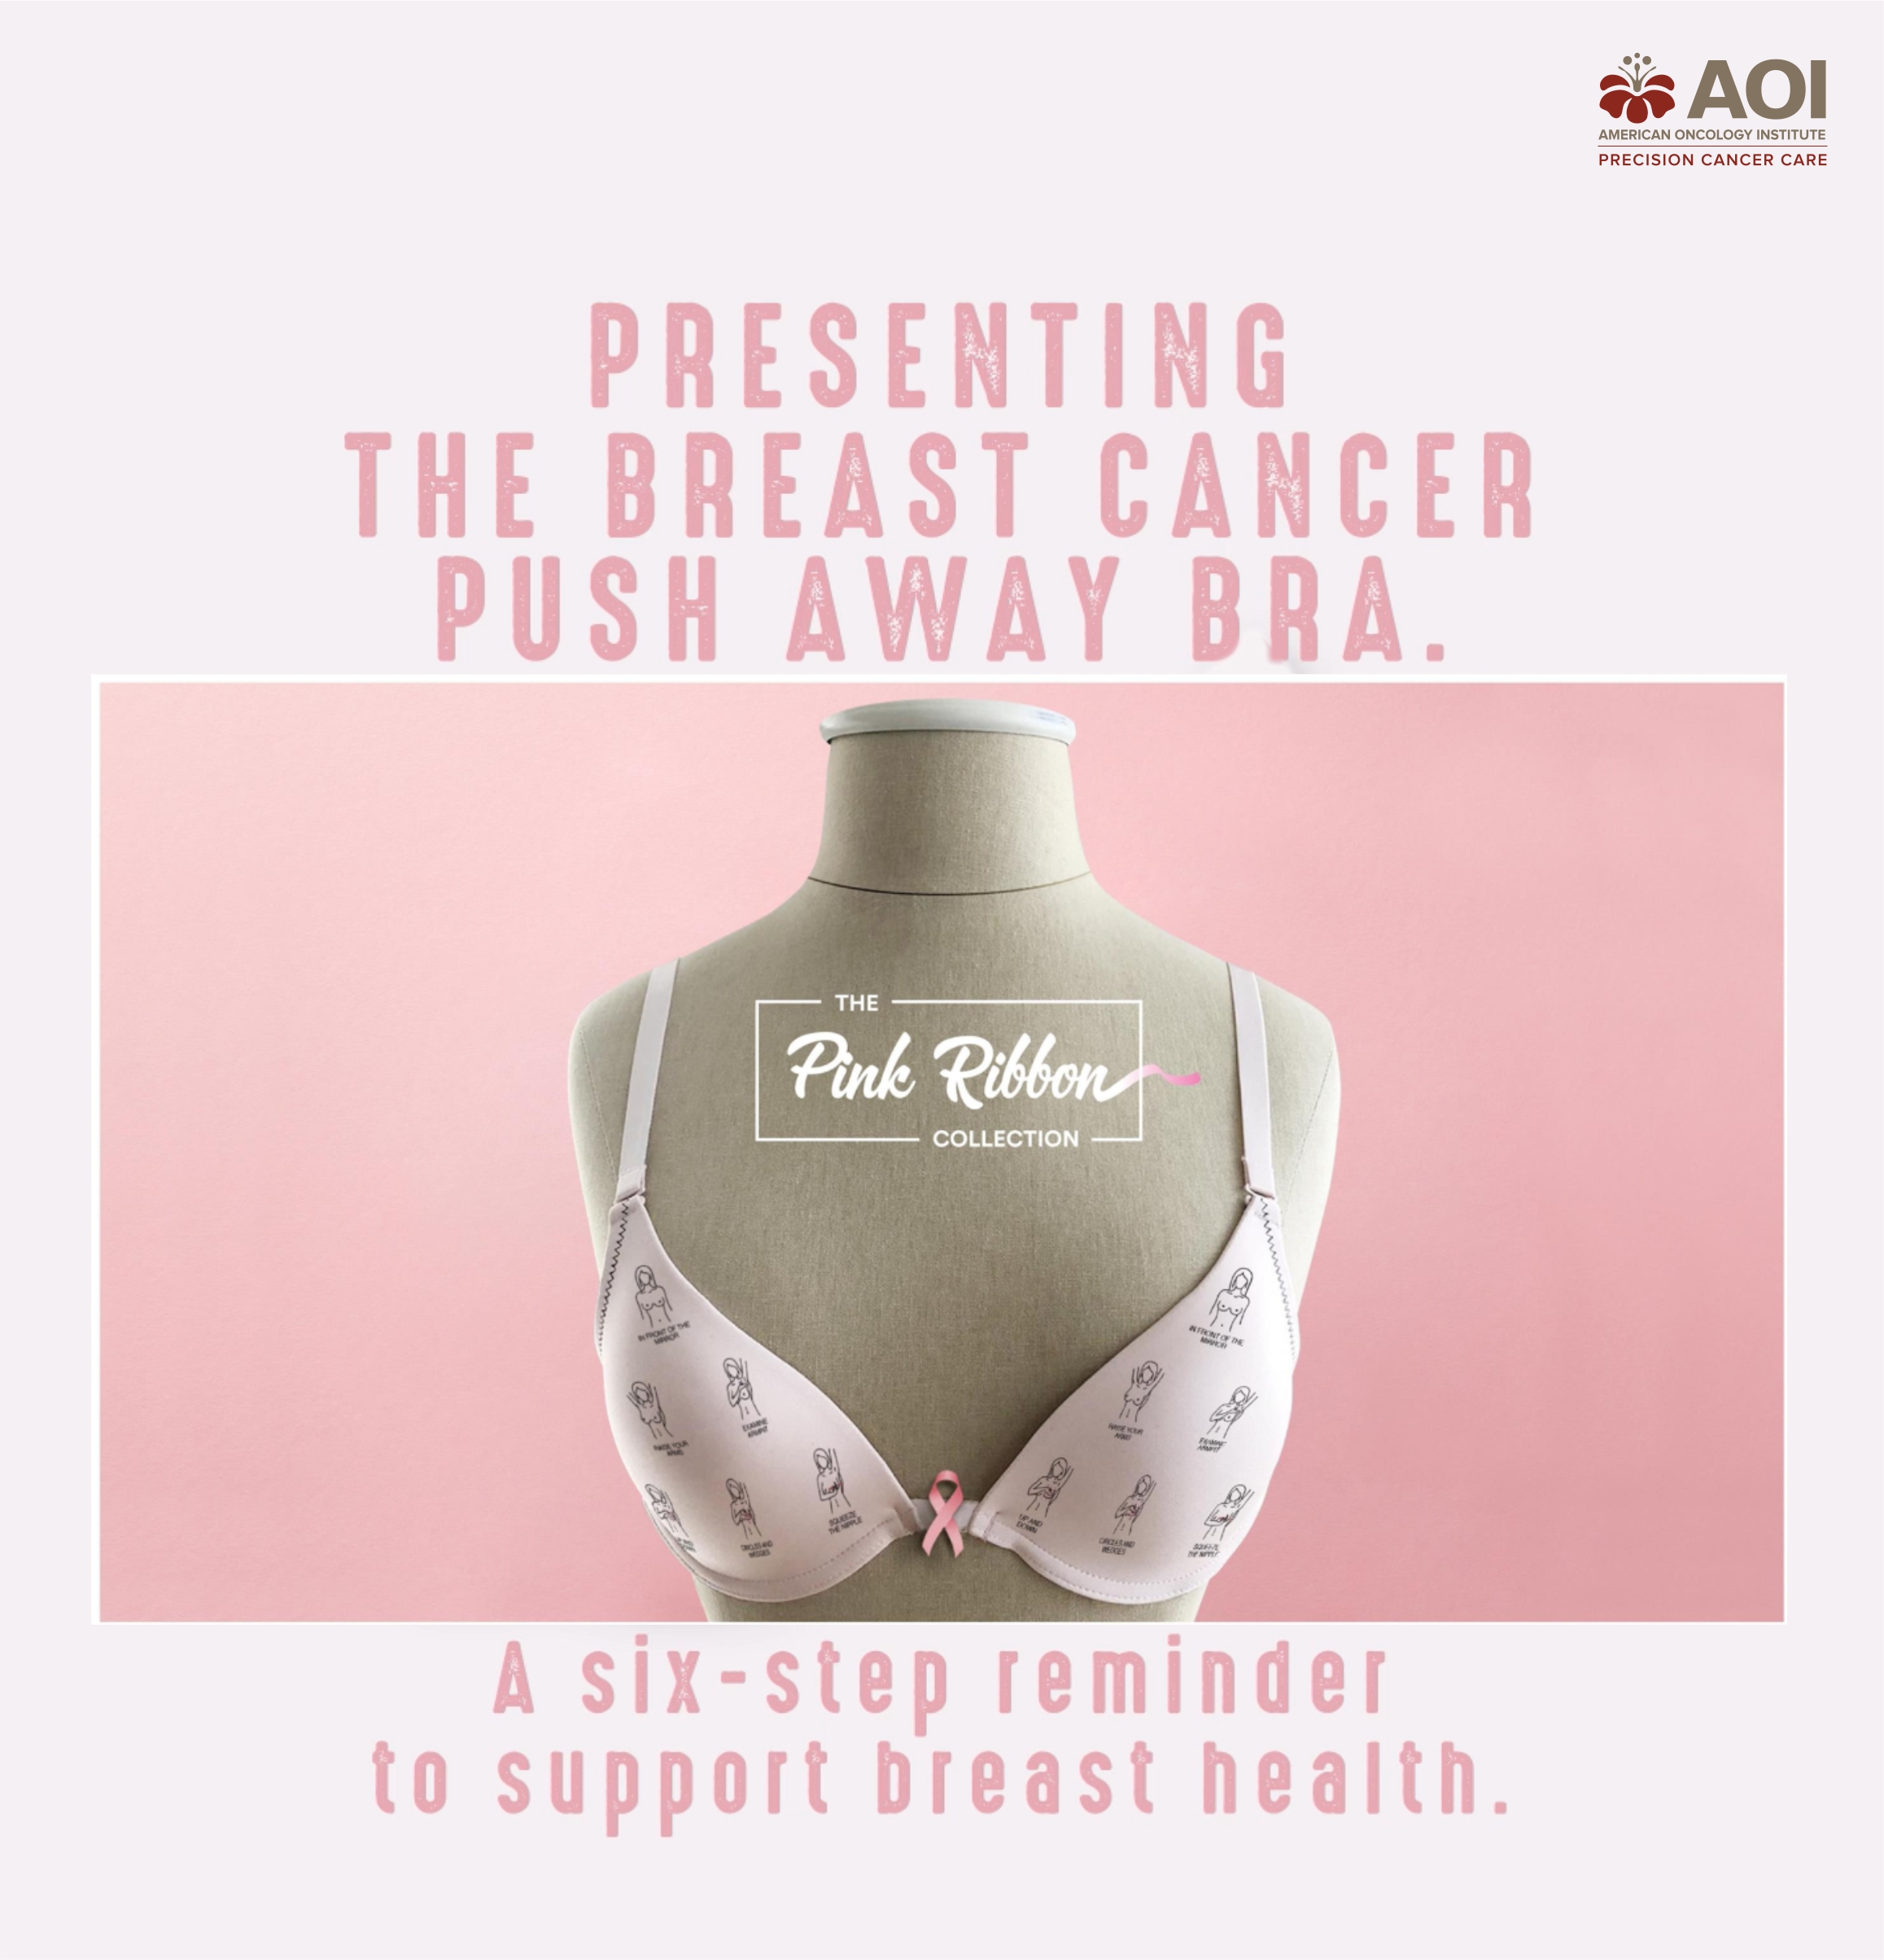 dais Period Underwear  Breast Cancer Charity Edition